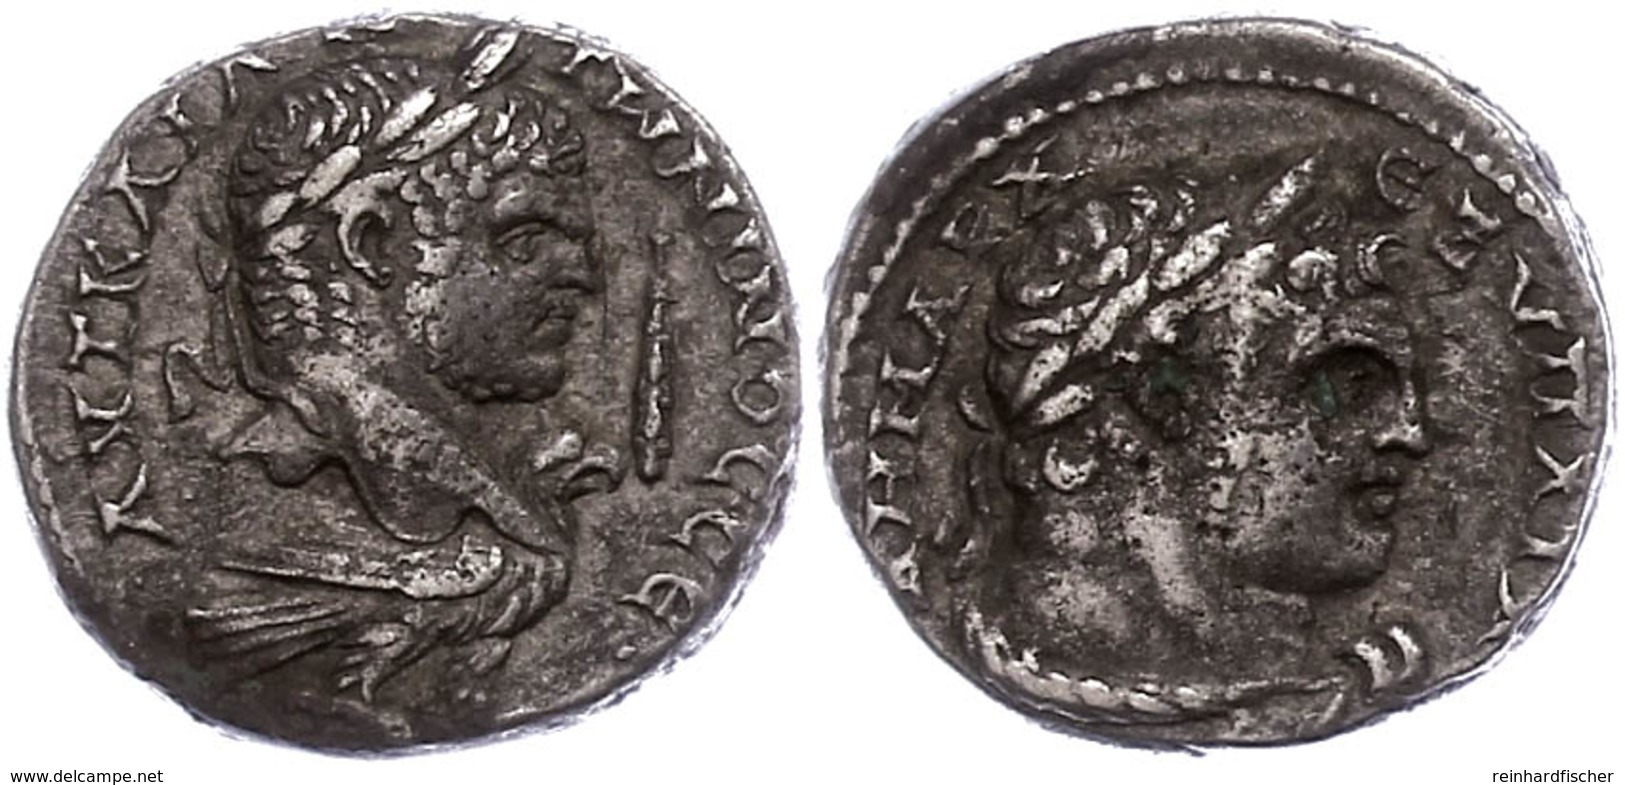 Phönizien, Tyros, Tetradrachme (12,81g), Caracalla, 213-217, Av: Kopf Nach Rechts, Rechts Keule, Darunter Adler Nach Rec - Röm. Provinz